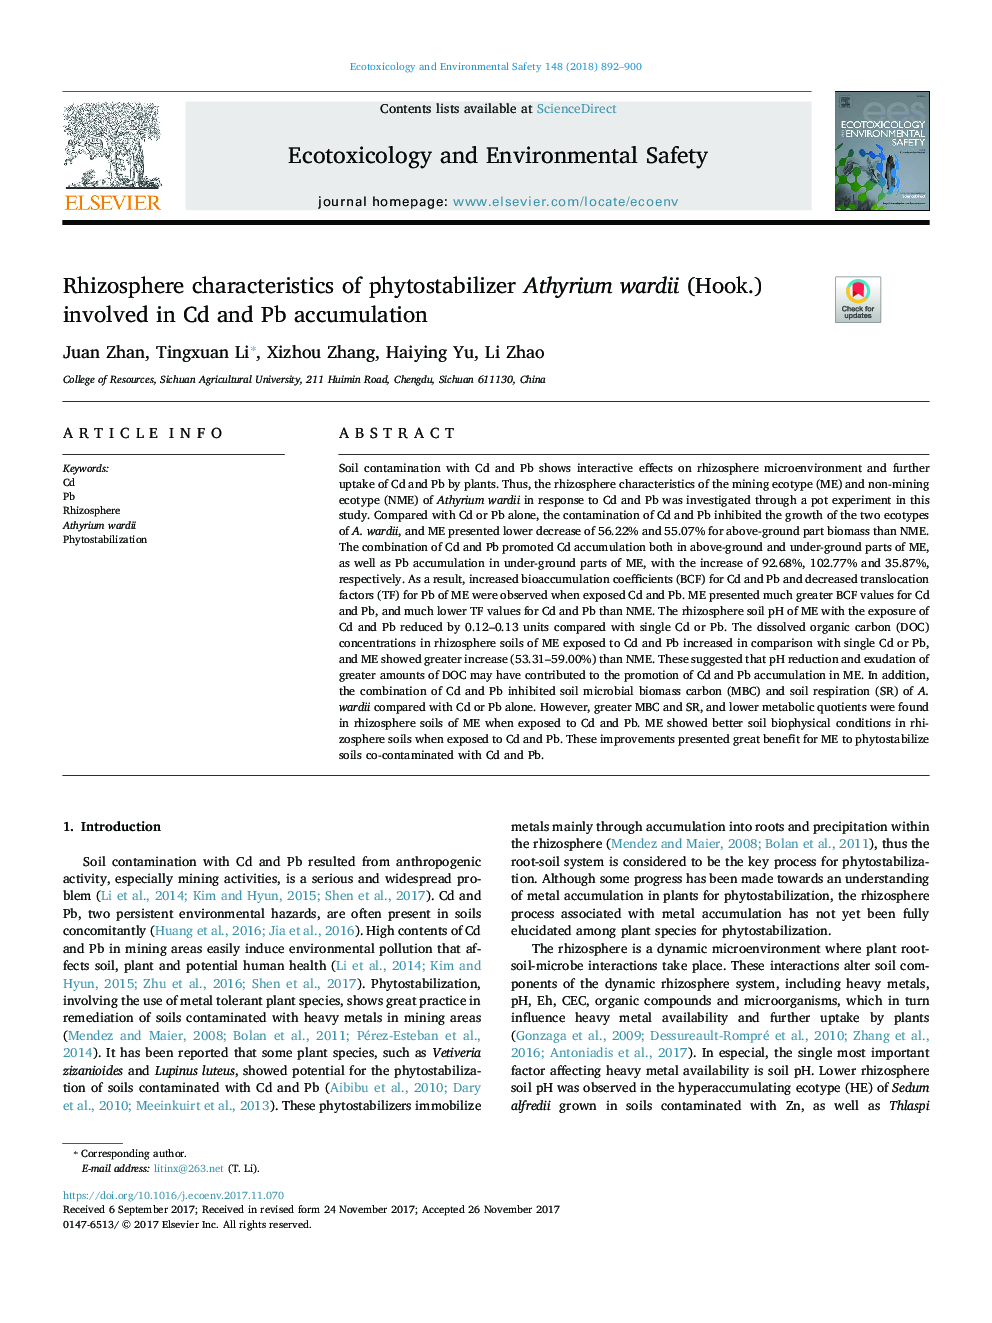 Rhizosphere characteristics of phytostabilizer Athyrium wardii (Hook.) involved in Cd and Pb accumulation